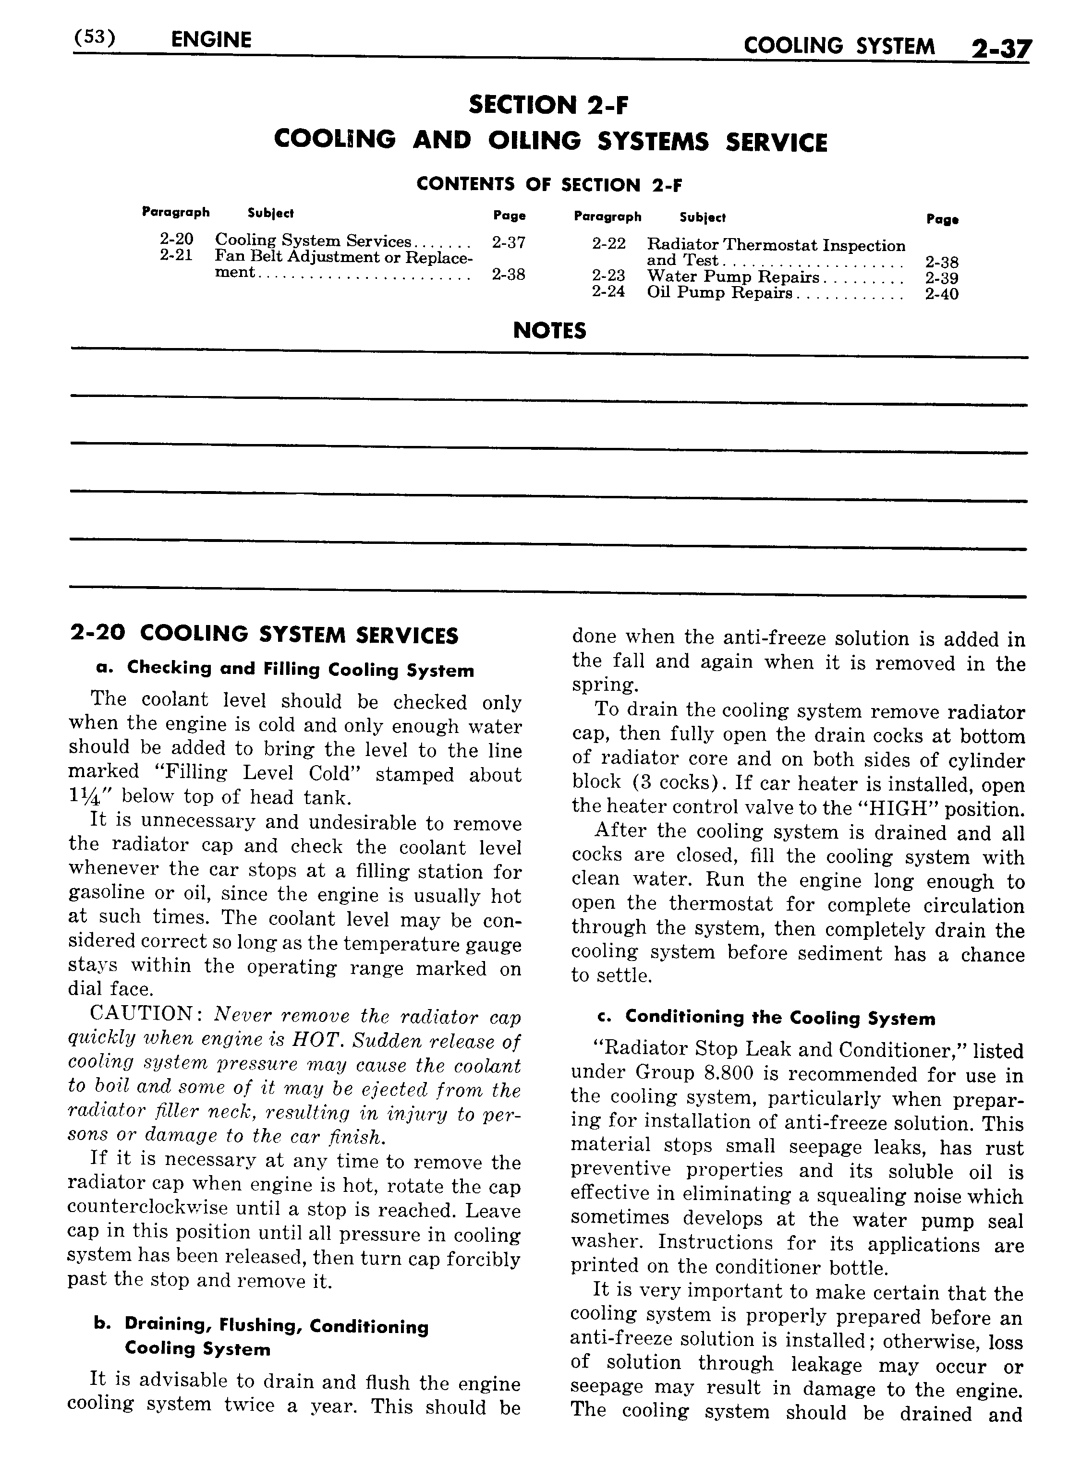 n_03 1956 Buick Shop Manual - Engine-037-037.jpg